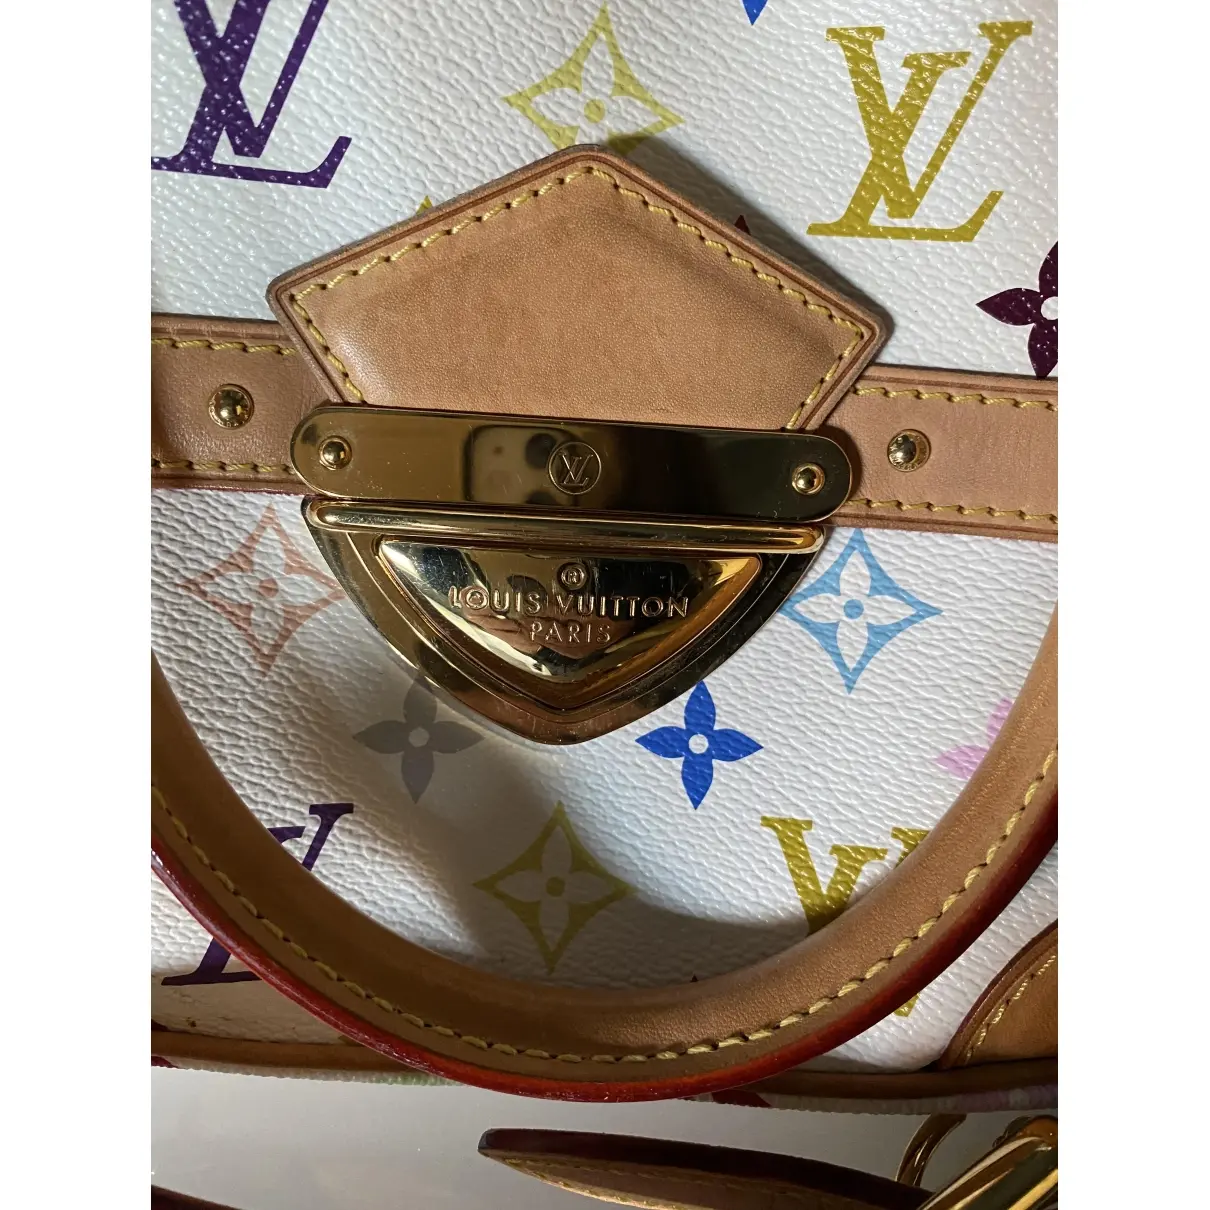 Rita leather handbag Louis Vuitton